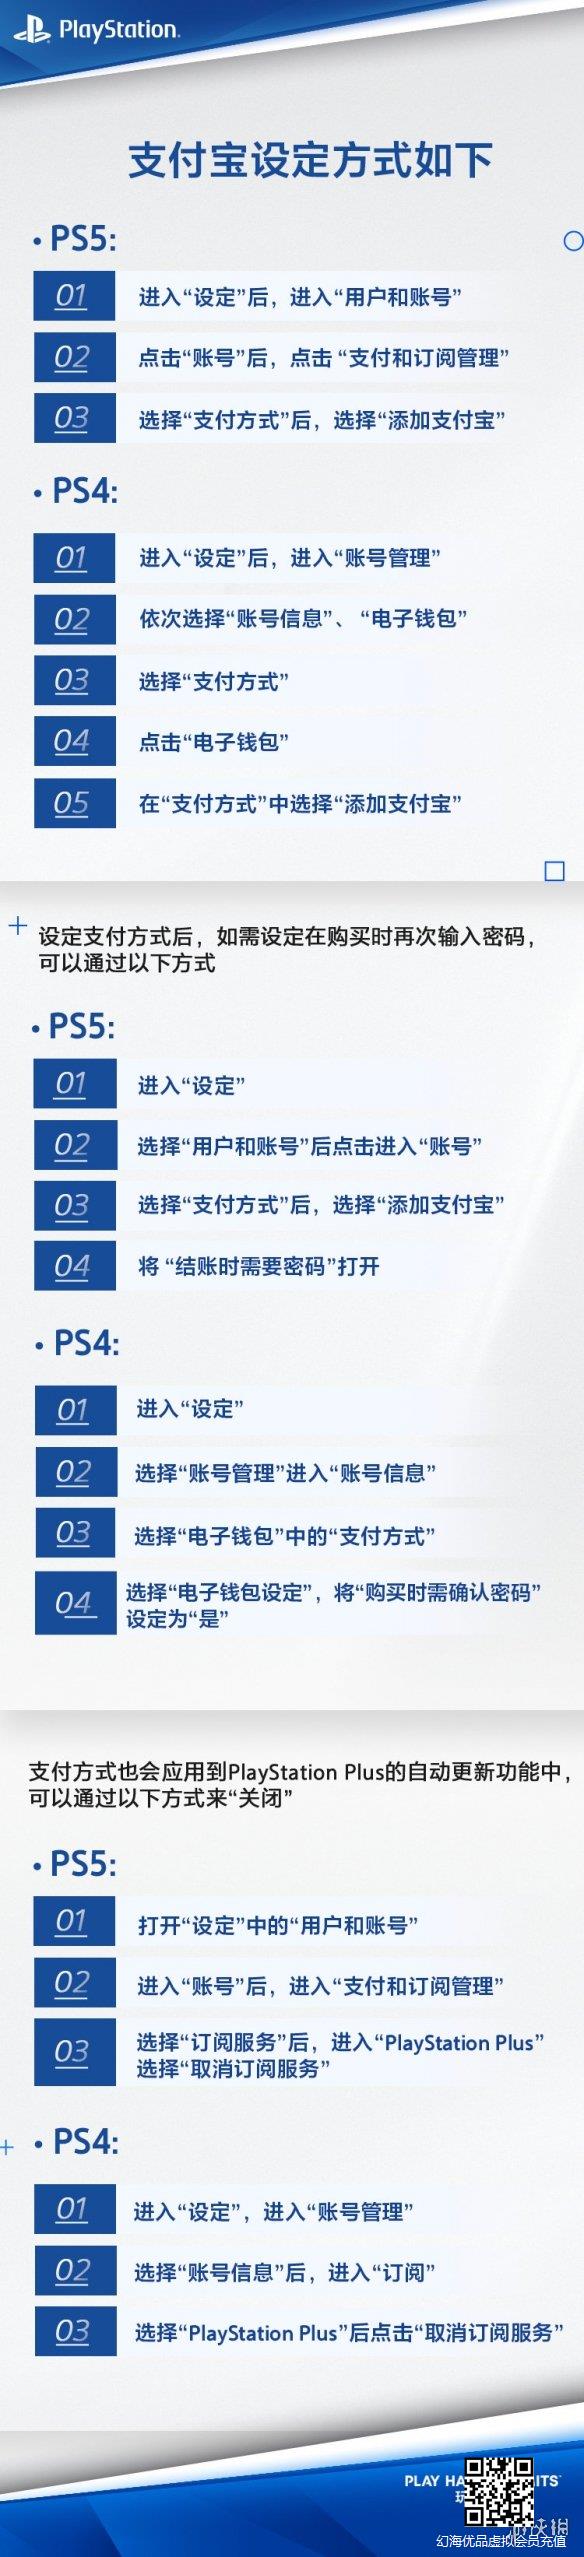 PS4/PS5更新后可绑定支付宝 买游戏更方便能免密支付